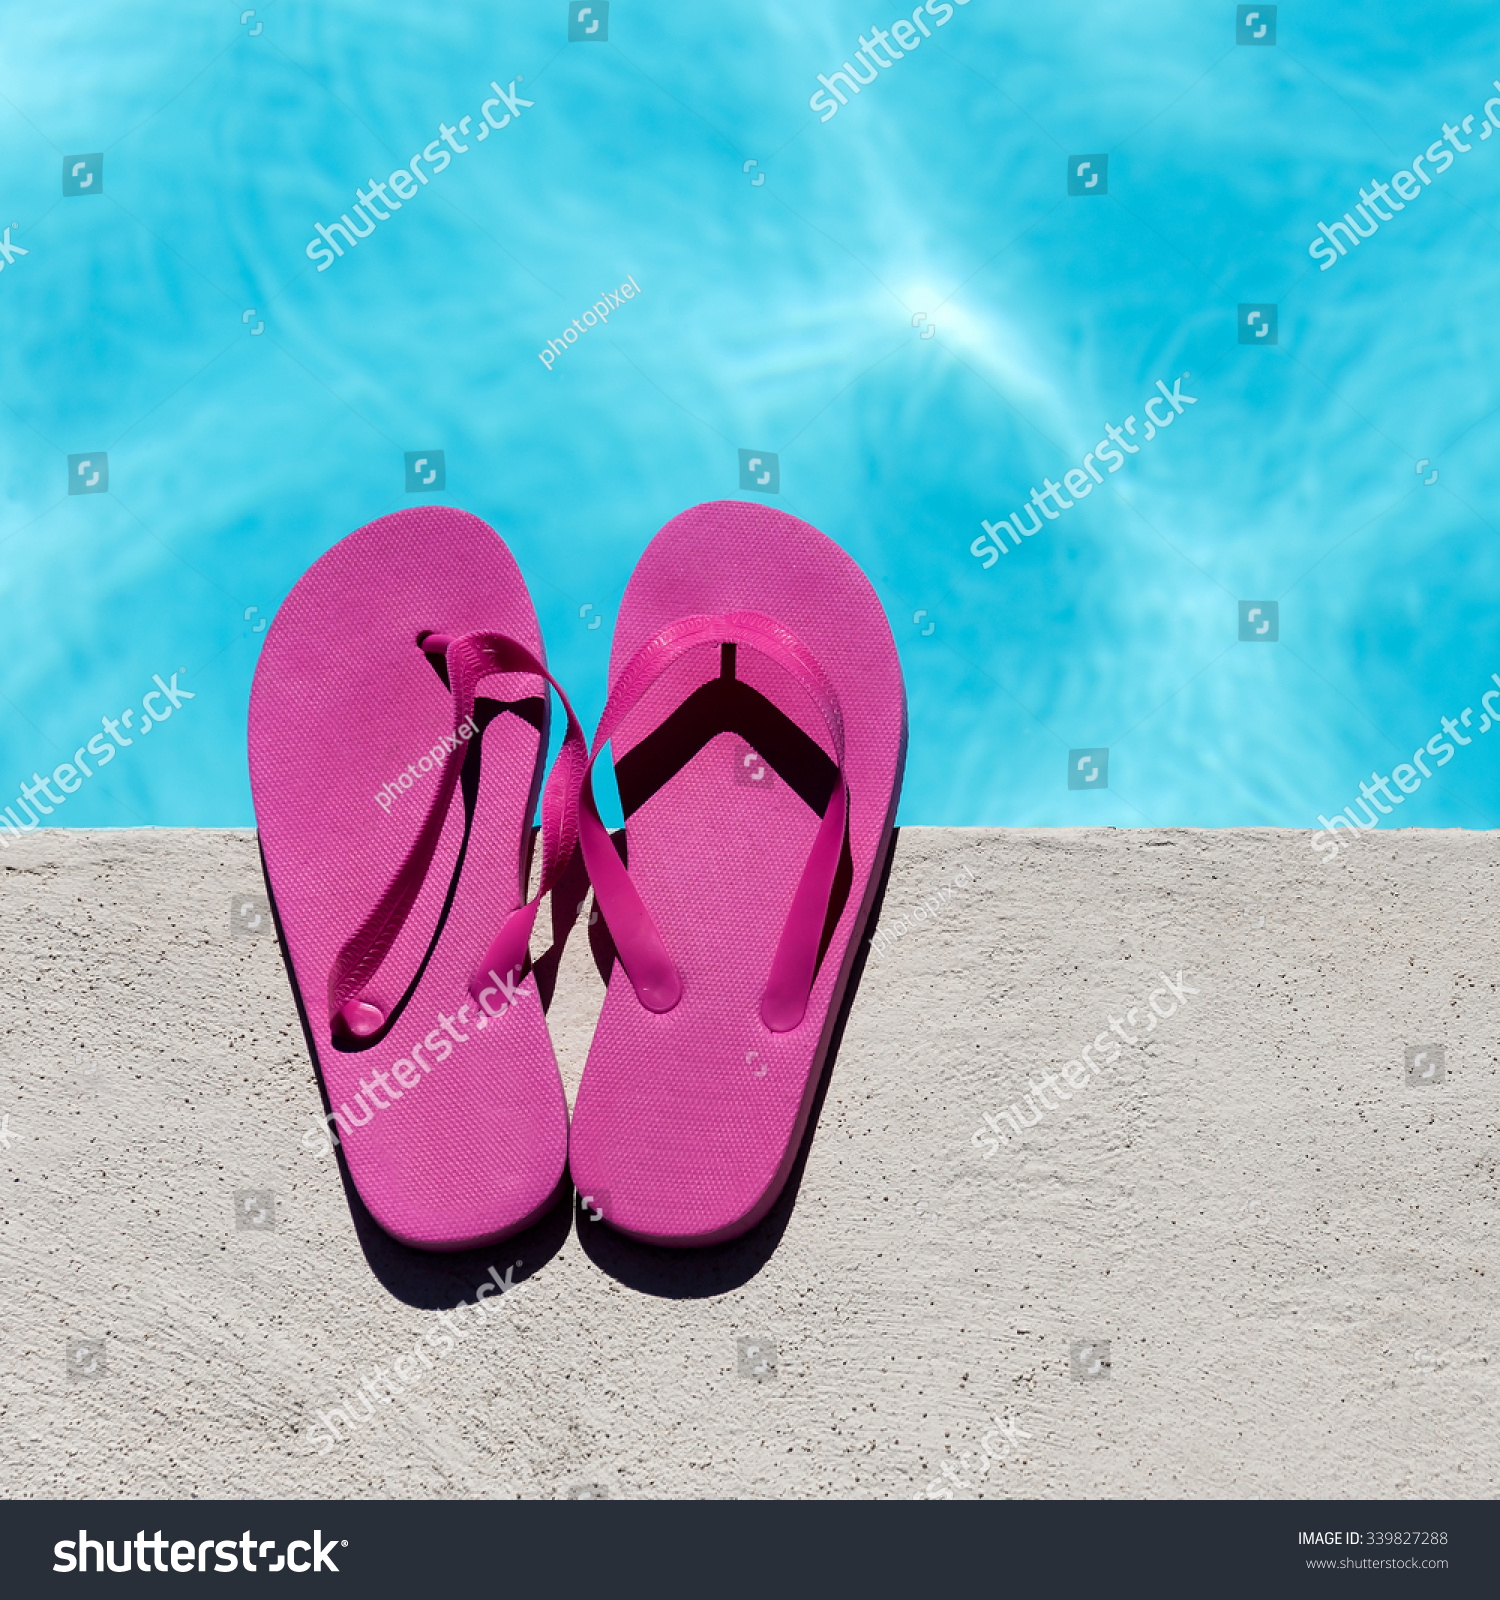 poolside slippers